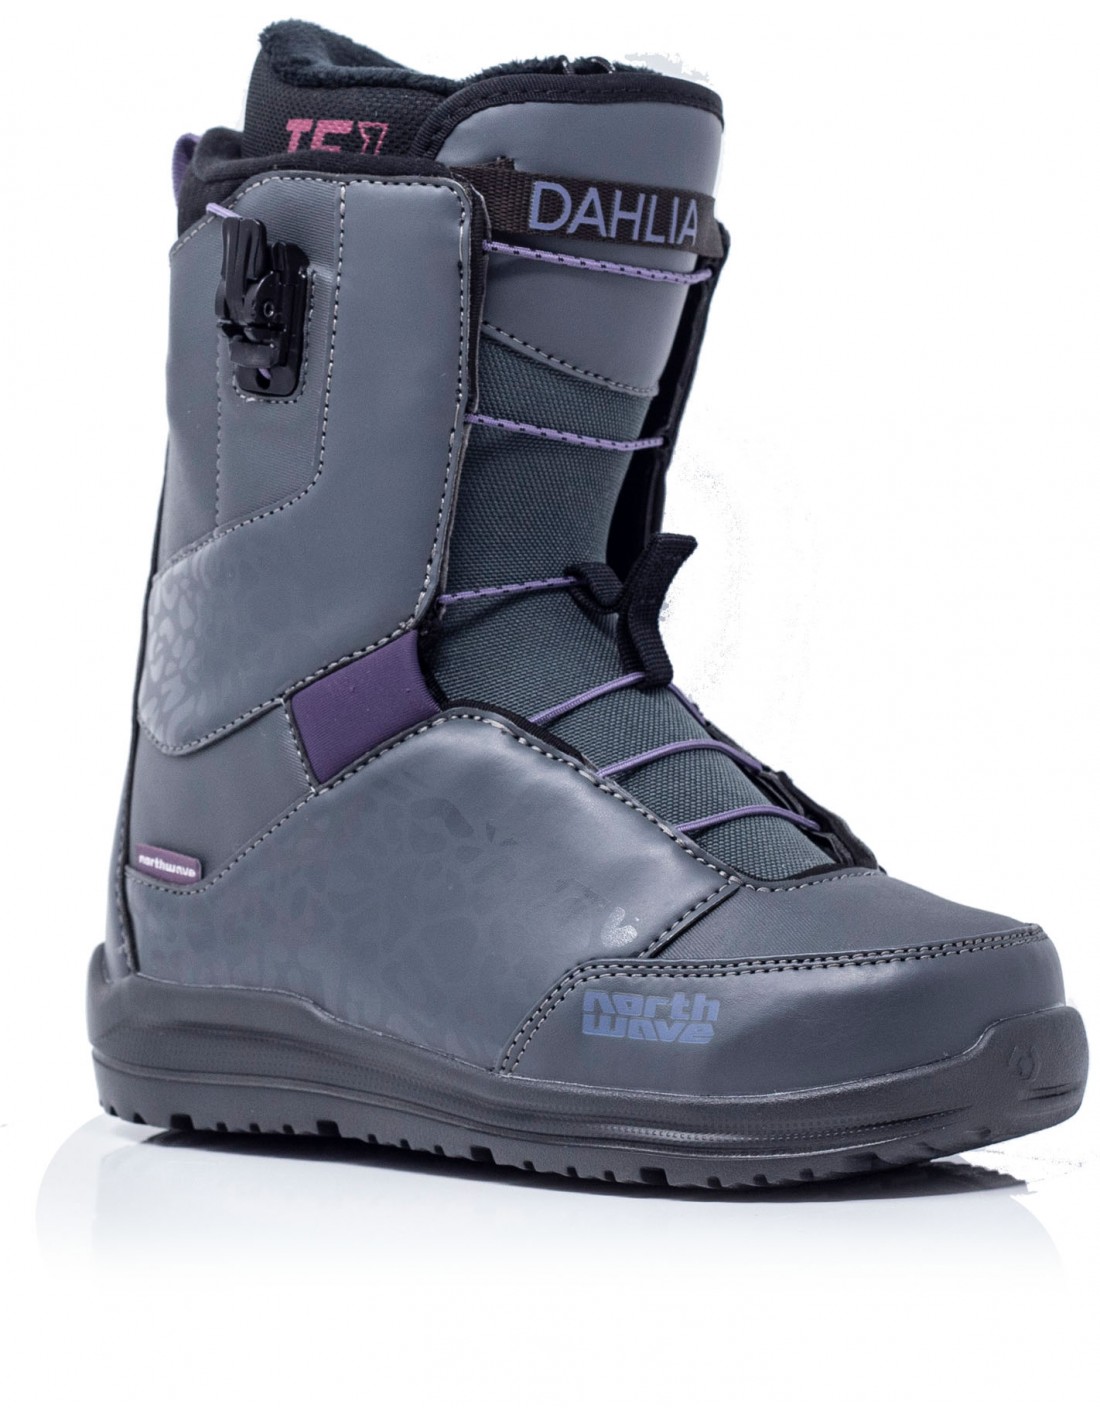 $195 Womens RARE Northwave Dahlia SL Snowboard Boots USA Ladies Size 6 6.5 7 7.5 